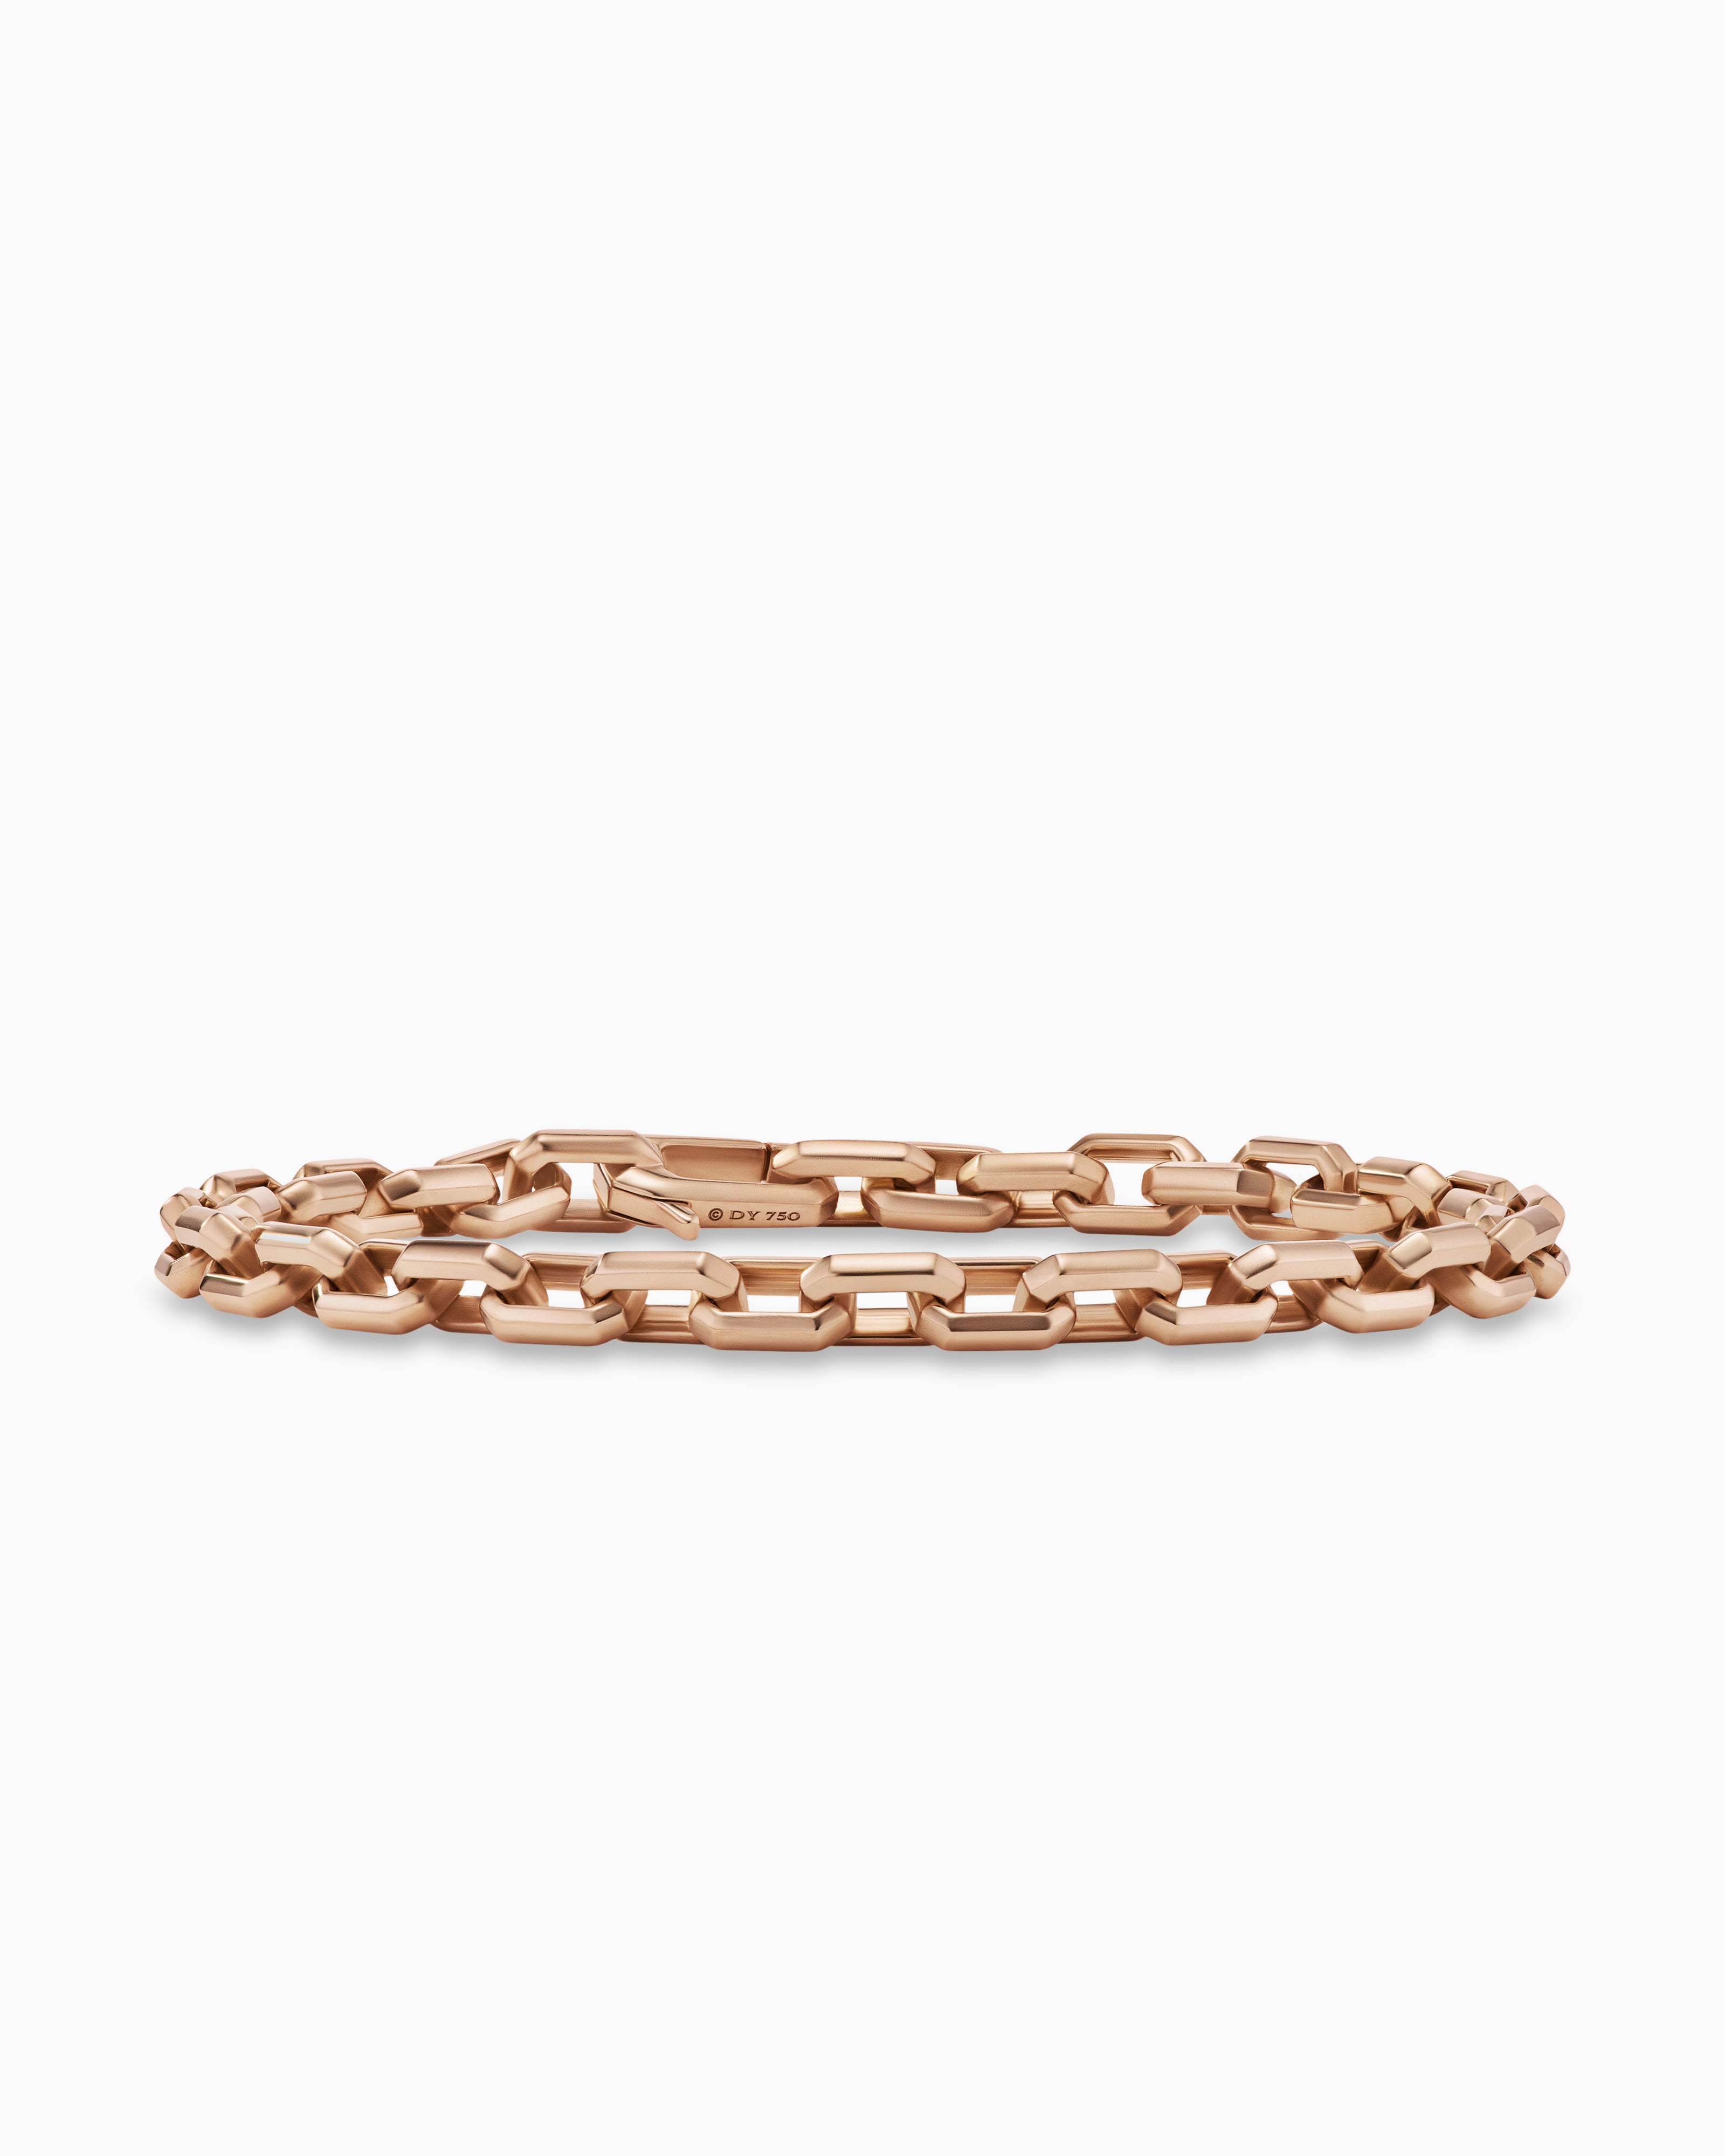 Streamline Heirloom Chain Link Bracelet in 18K Rose Gold, 5.5mm